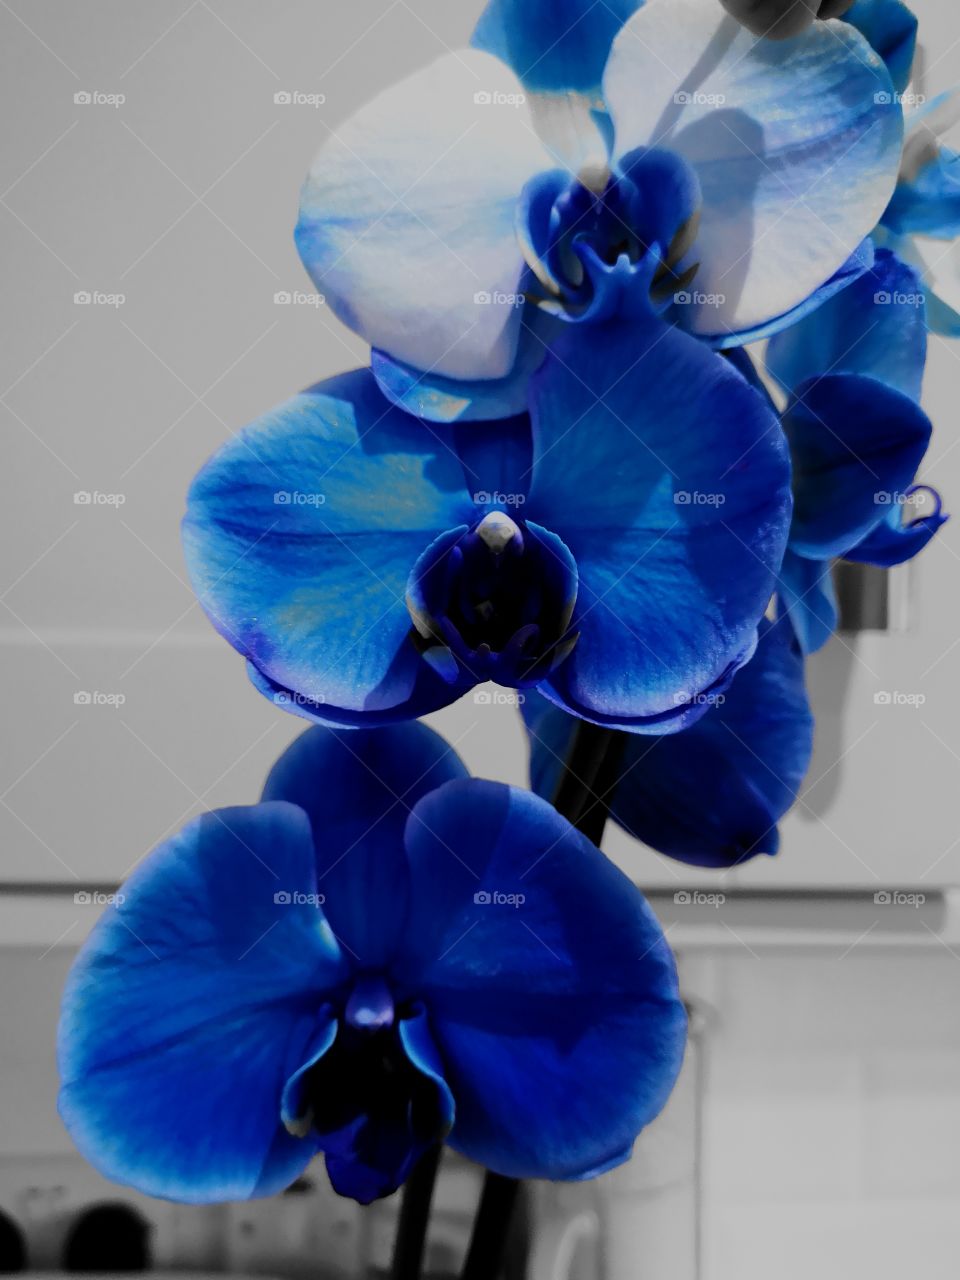 Orchid blues